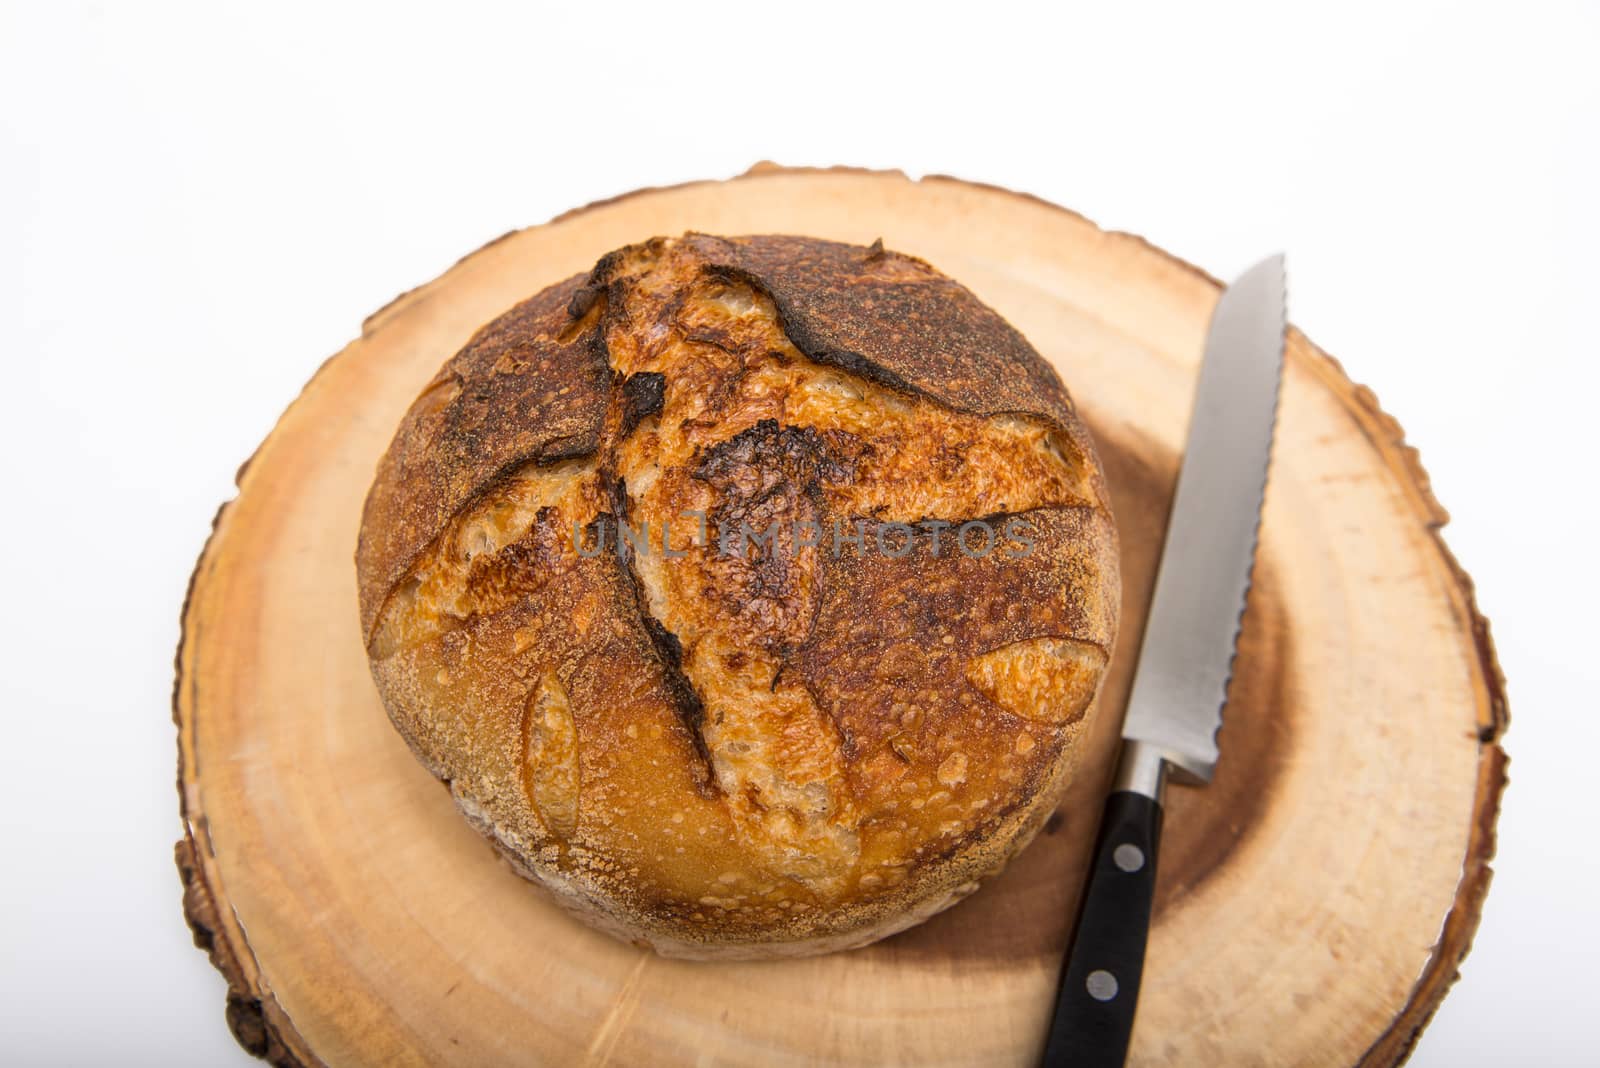 A fresh loaf of round artisan sourdough bread with a breaqd knife.